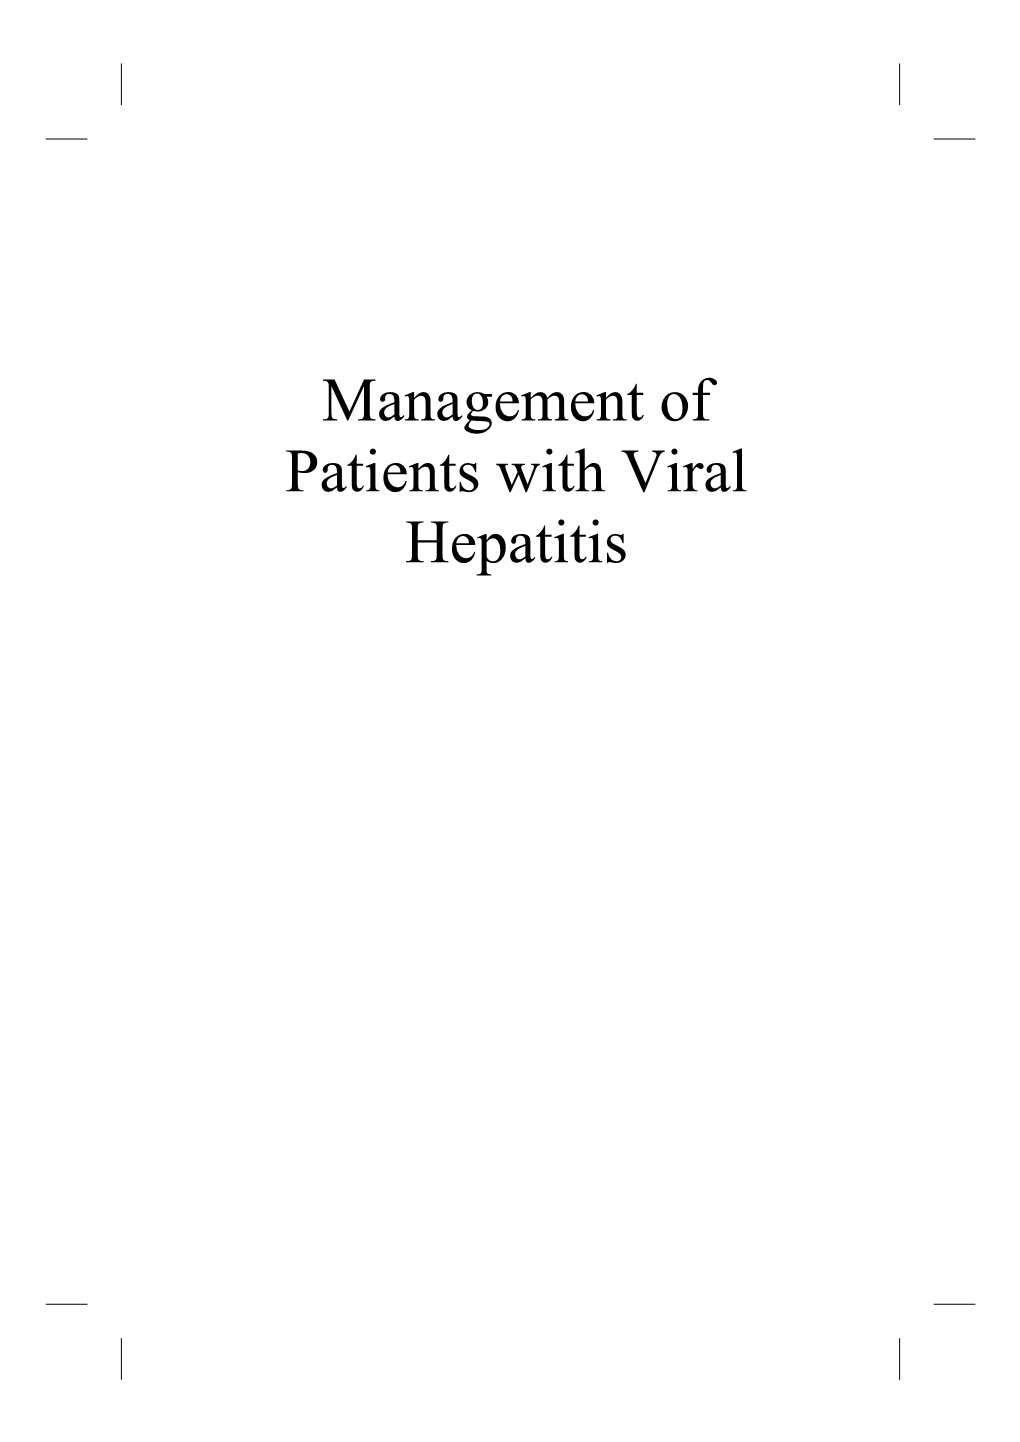 Management of Patients with Viral Hepatitis